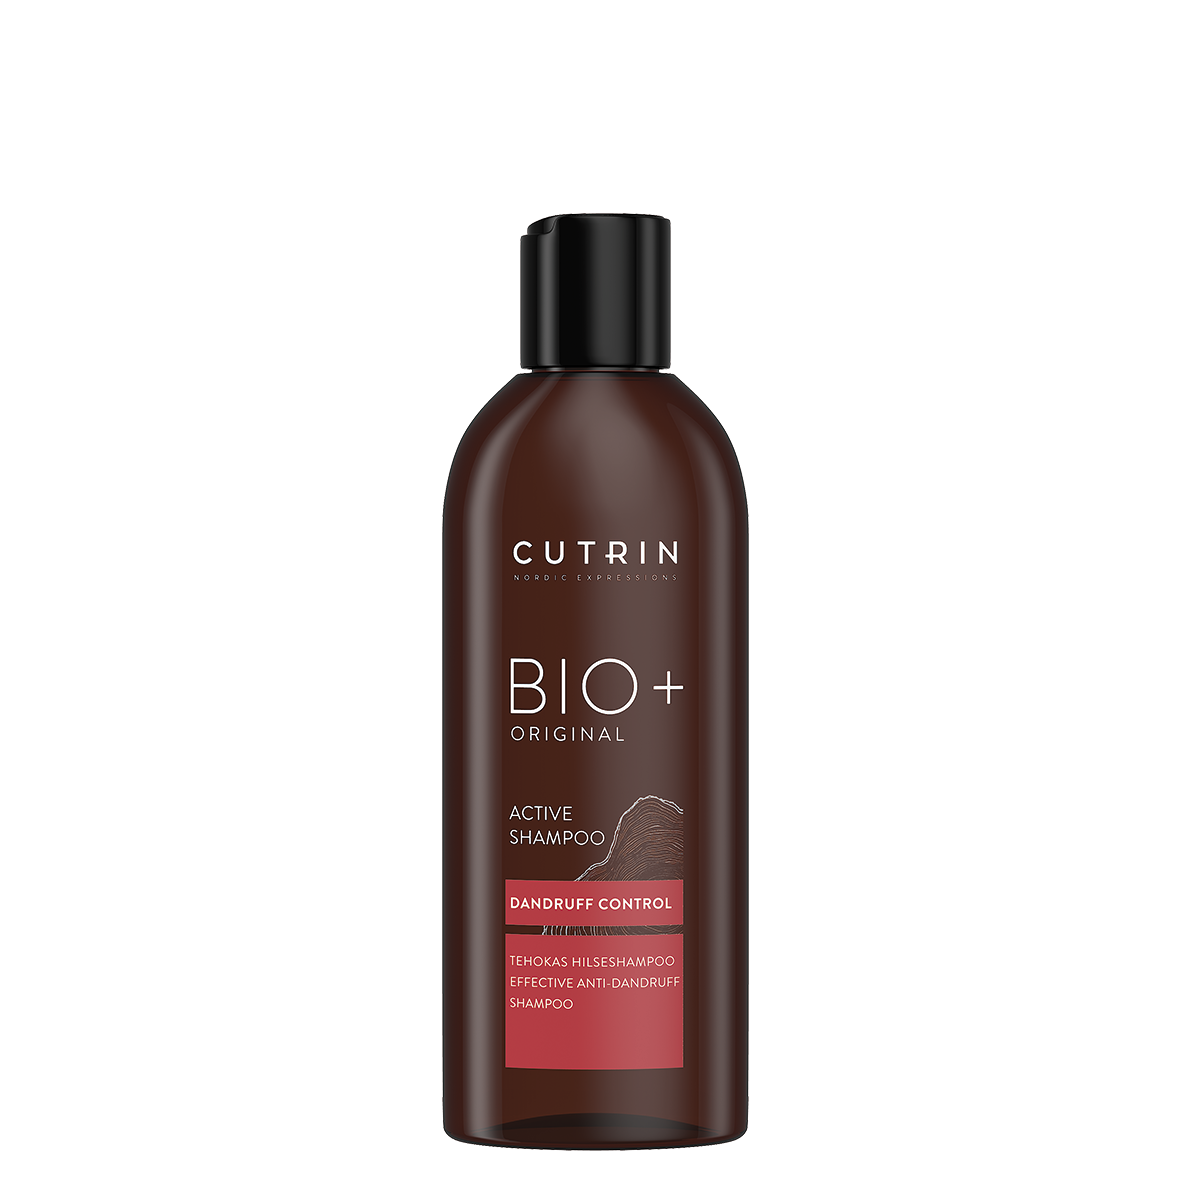 Blind konvergens Til sandheden CUTRIN – BIO+ – Original Active Shampoo 200 ml - Trenza.se